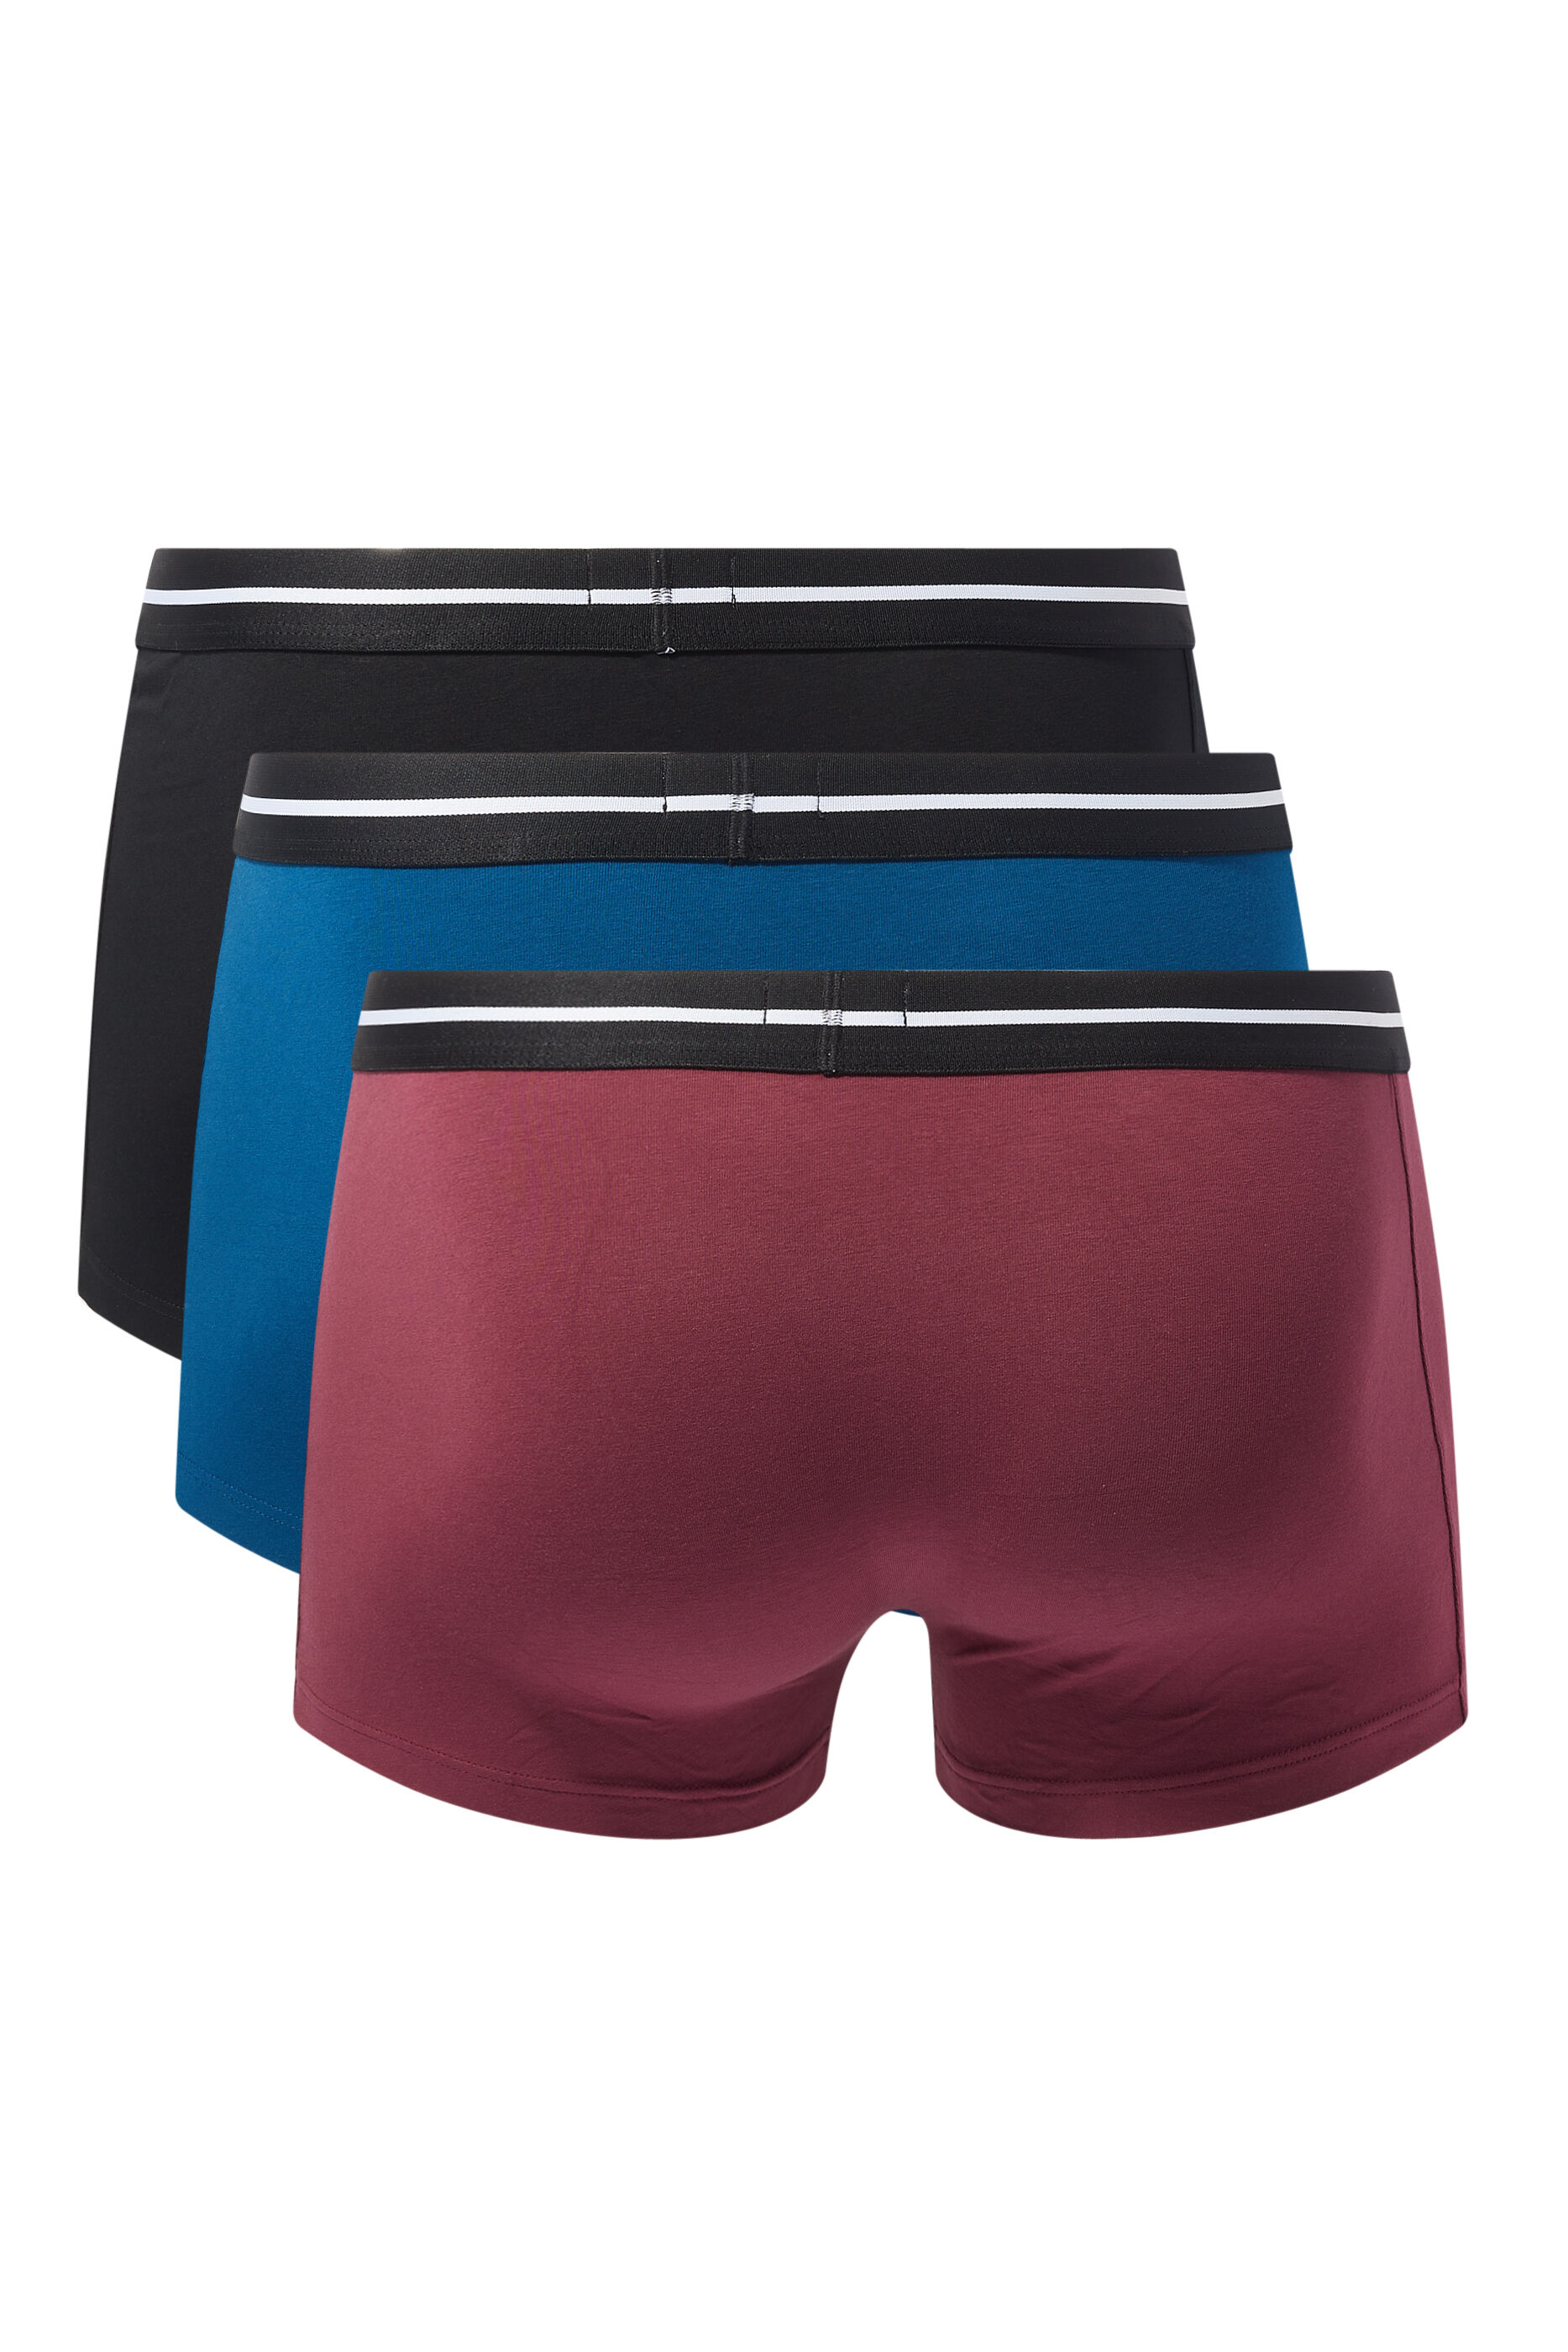 Bloomingdales Girls Clothing Underwear Briefs Bliss Girl Briefs Set of 3 